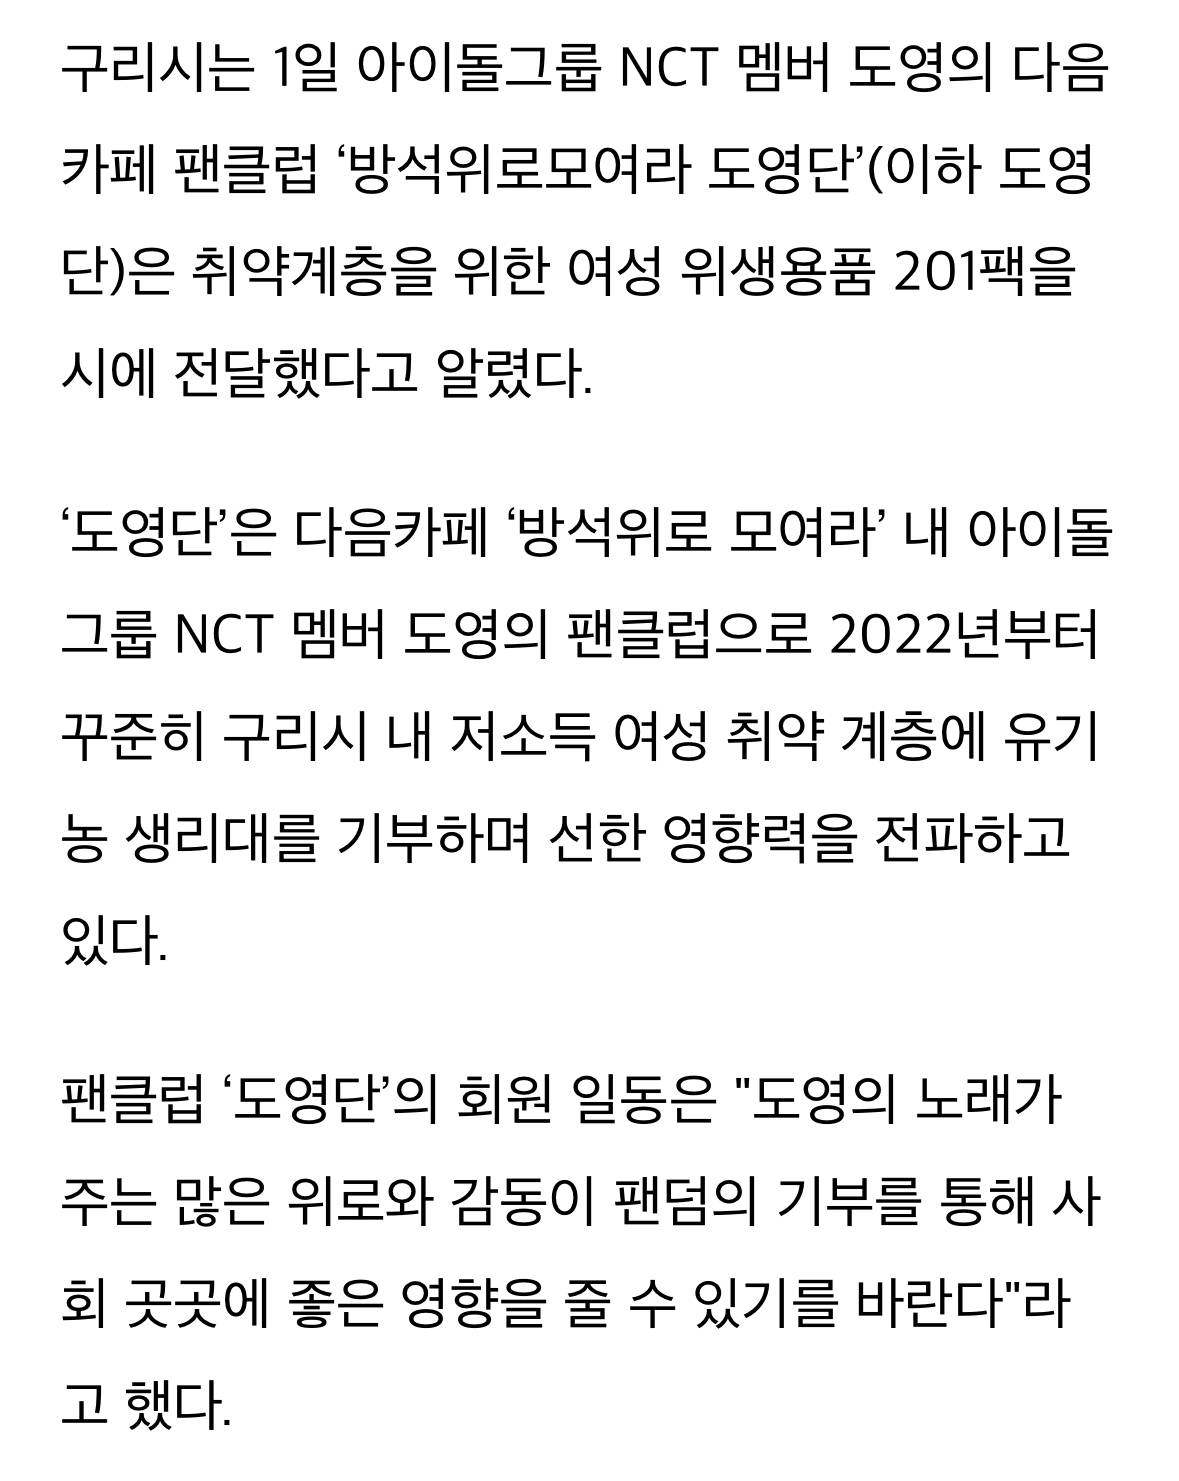 NCT 도영 팬클럽 '도영단', 취약계층 여성에 위생용품 구리시에 전달 | 인스티즈